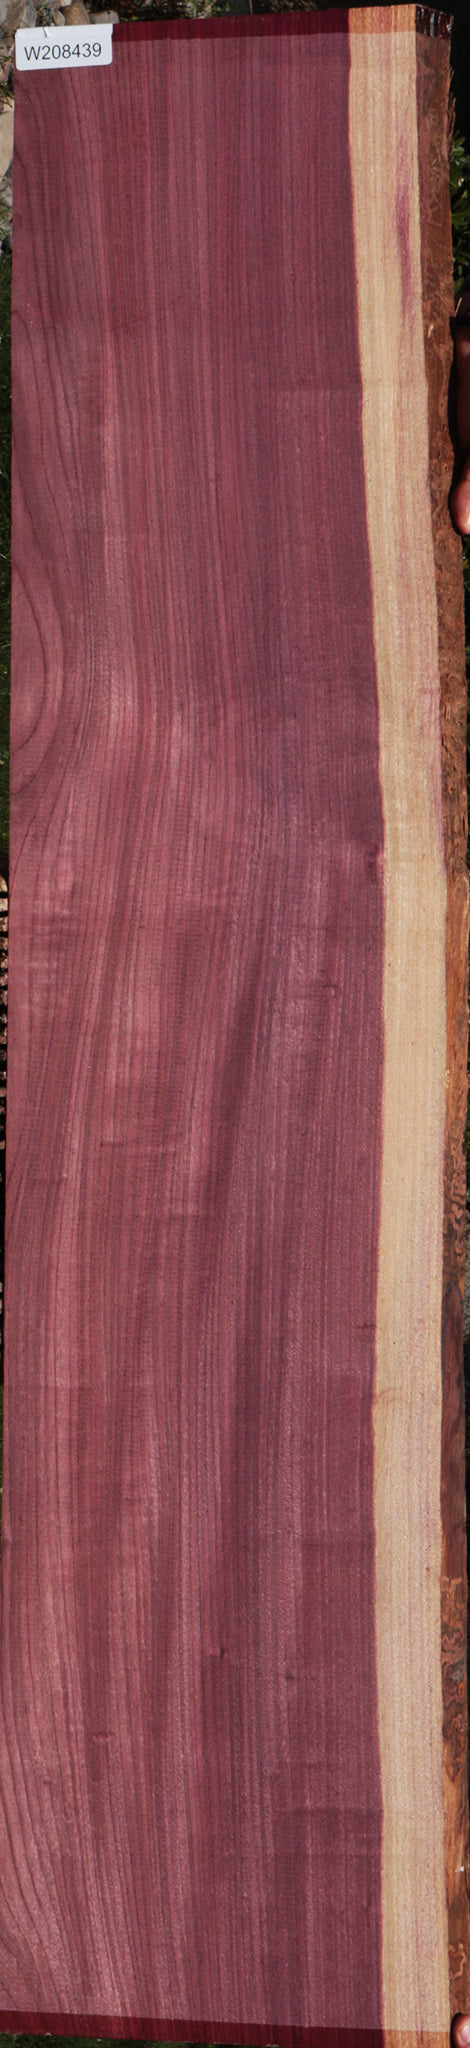 Figured Purpleheart Live Edge Lumber